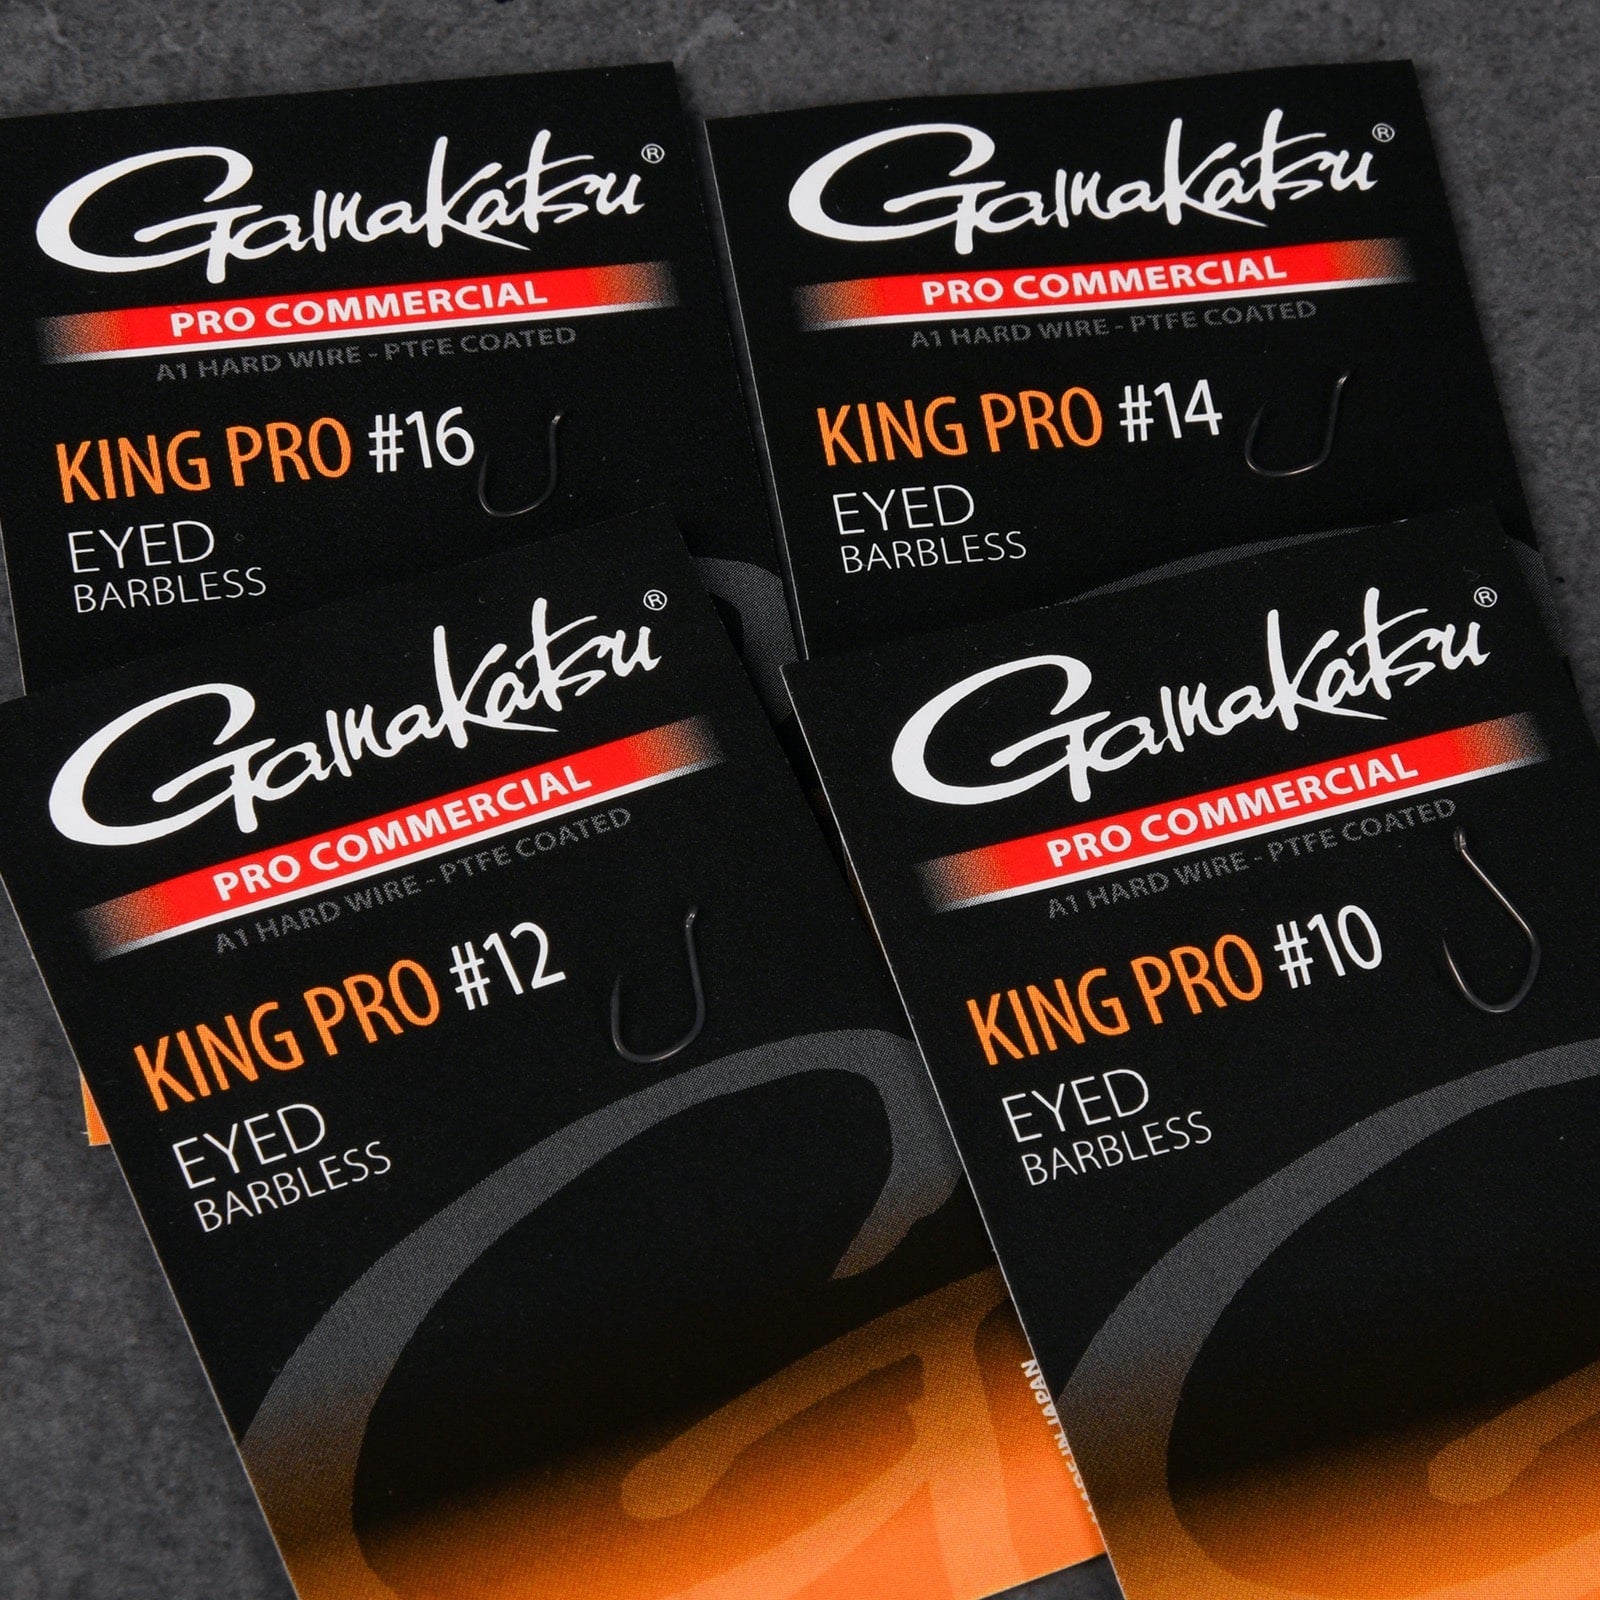 Gamakatsu Pro Commercial King Pro Eyed